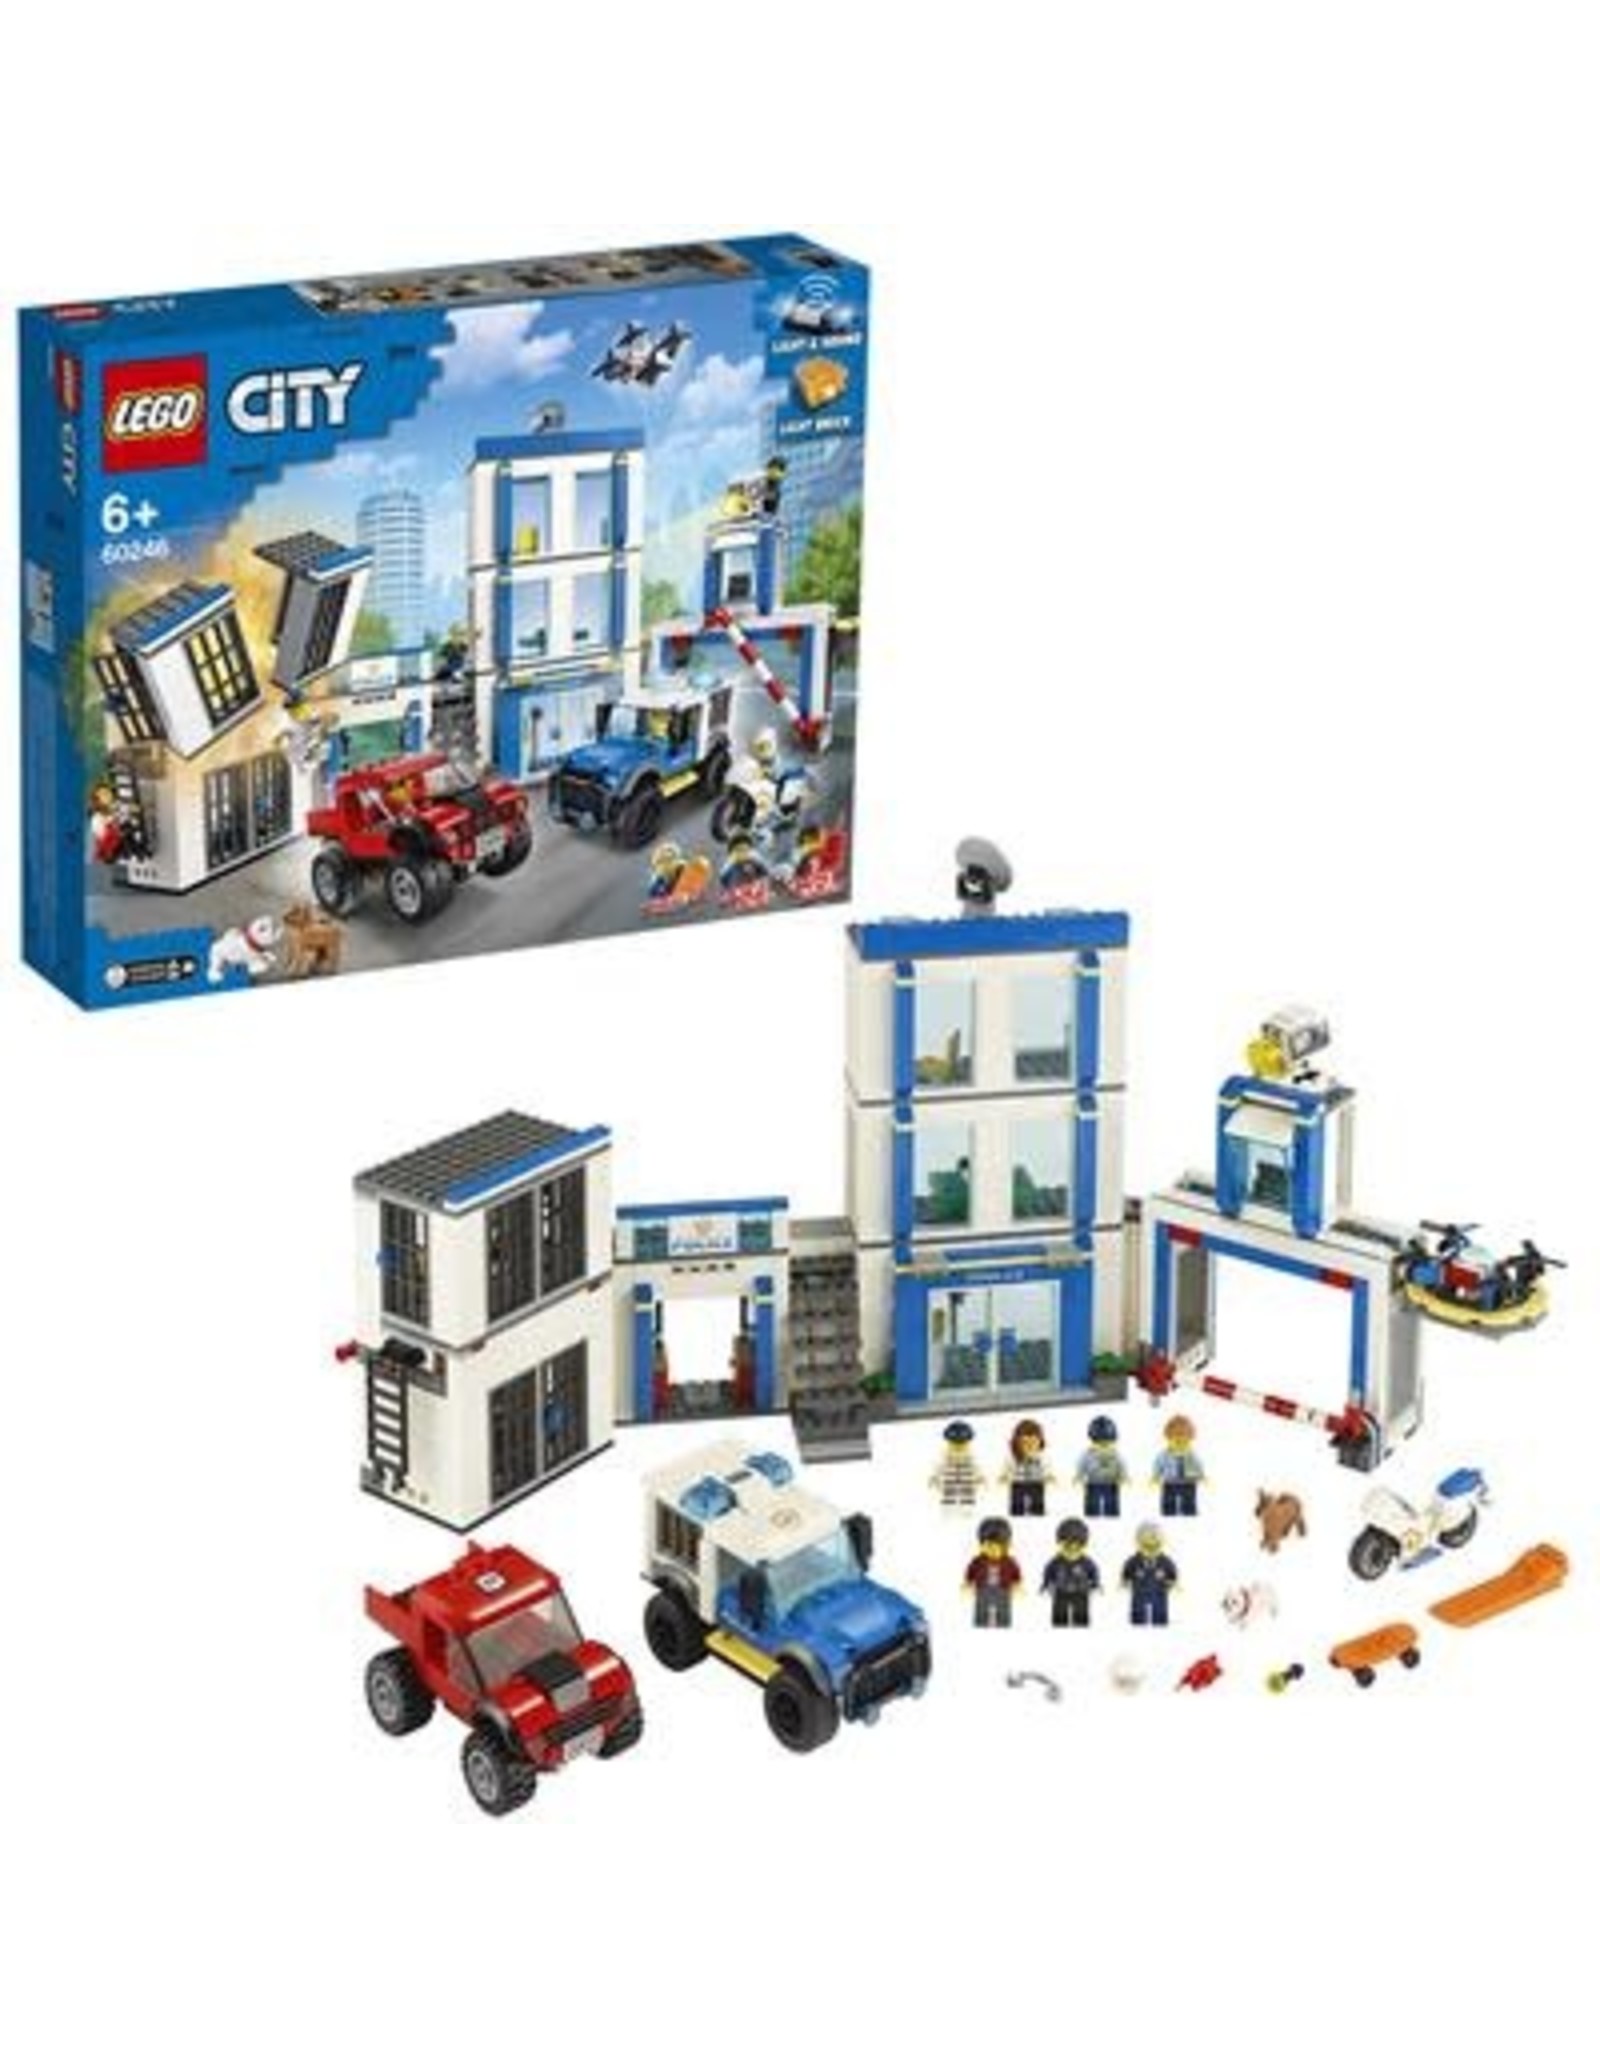 LEGO Lego City 60246 Politiebureau – Police Station